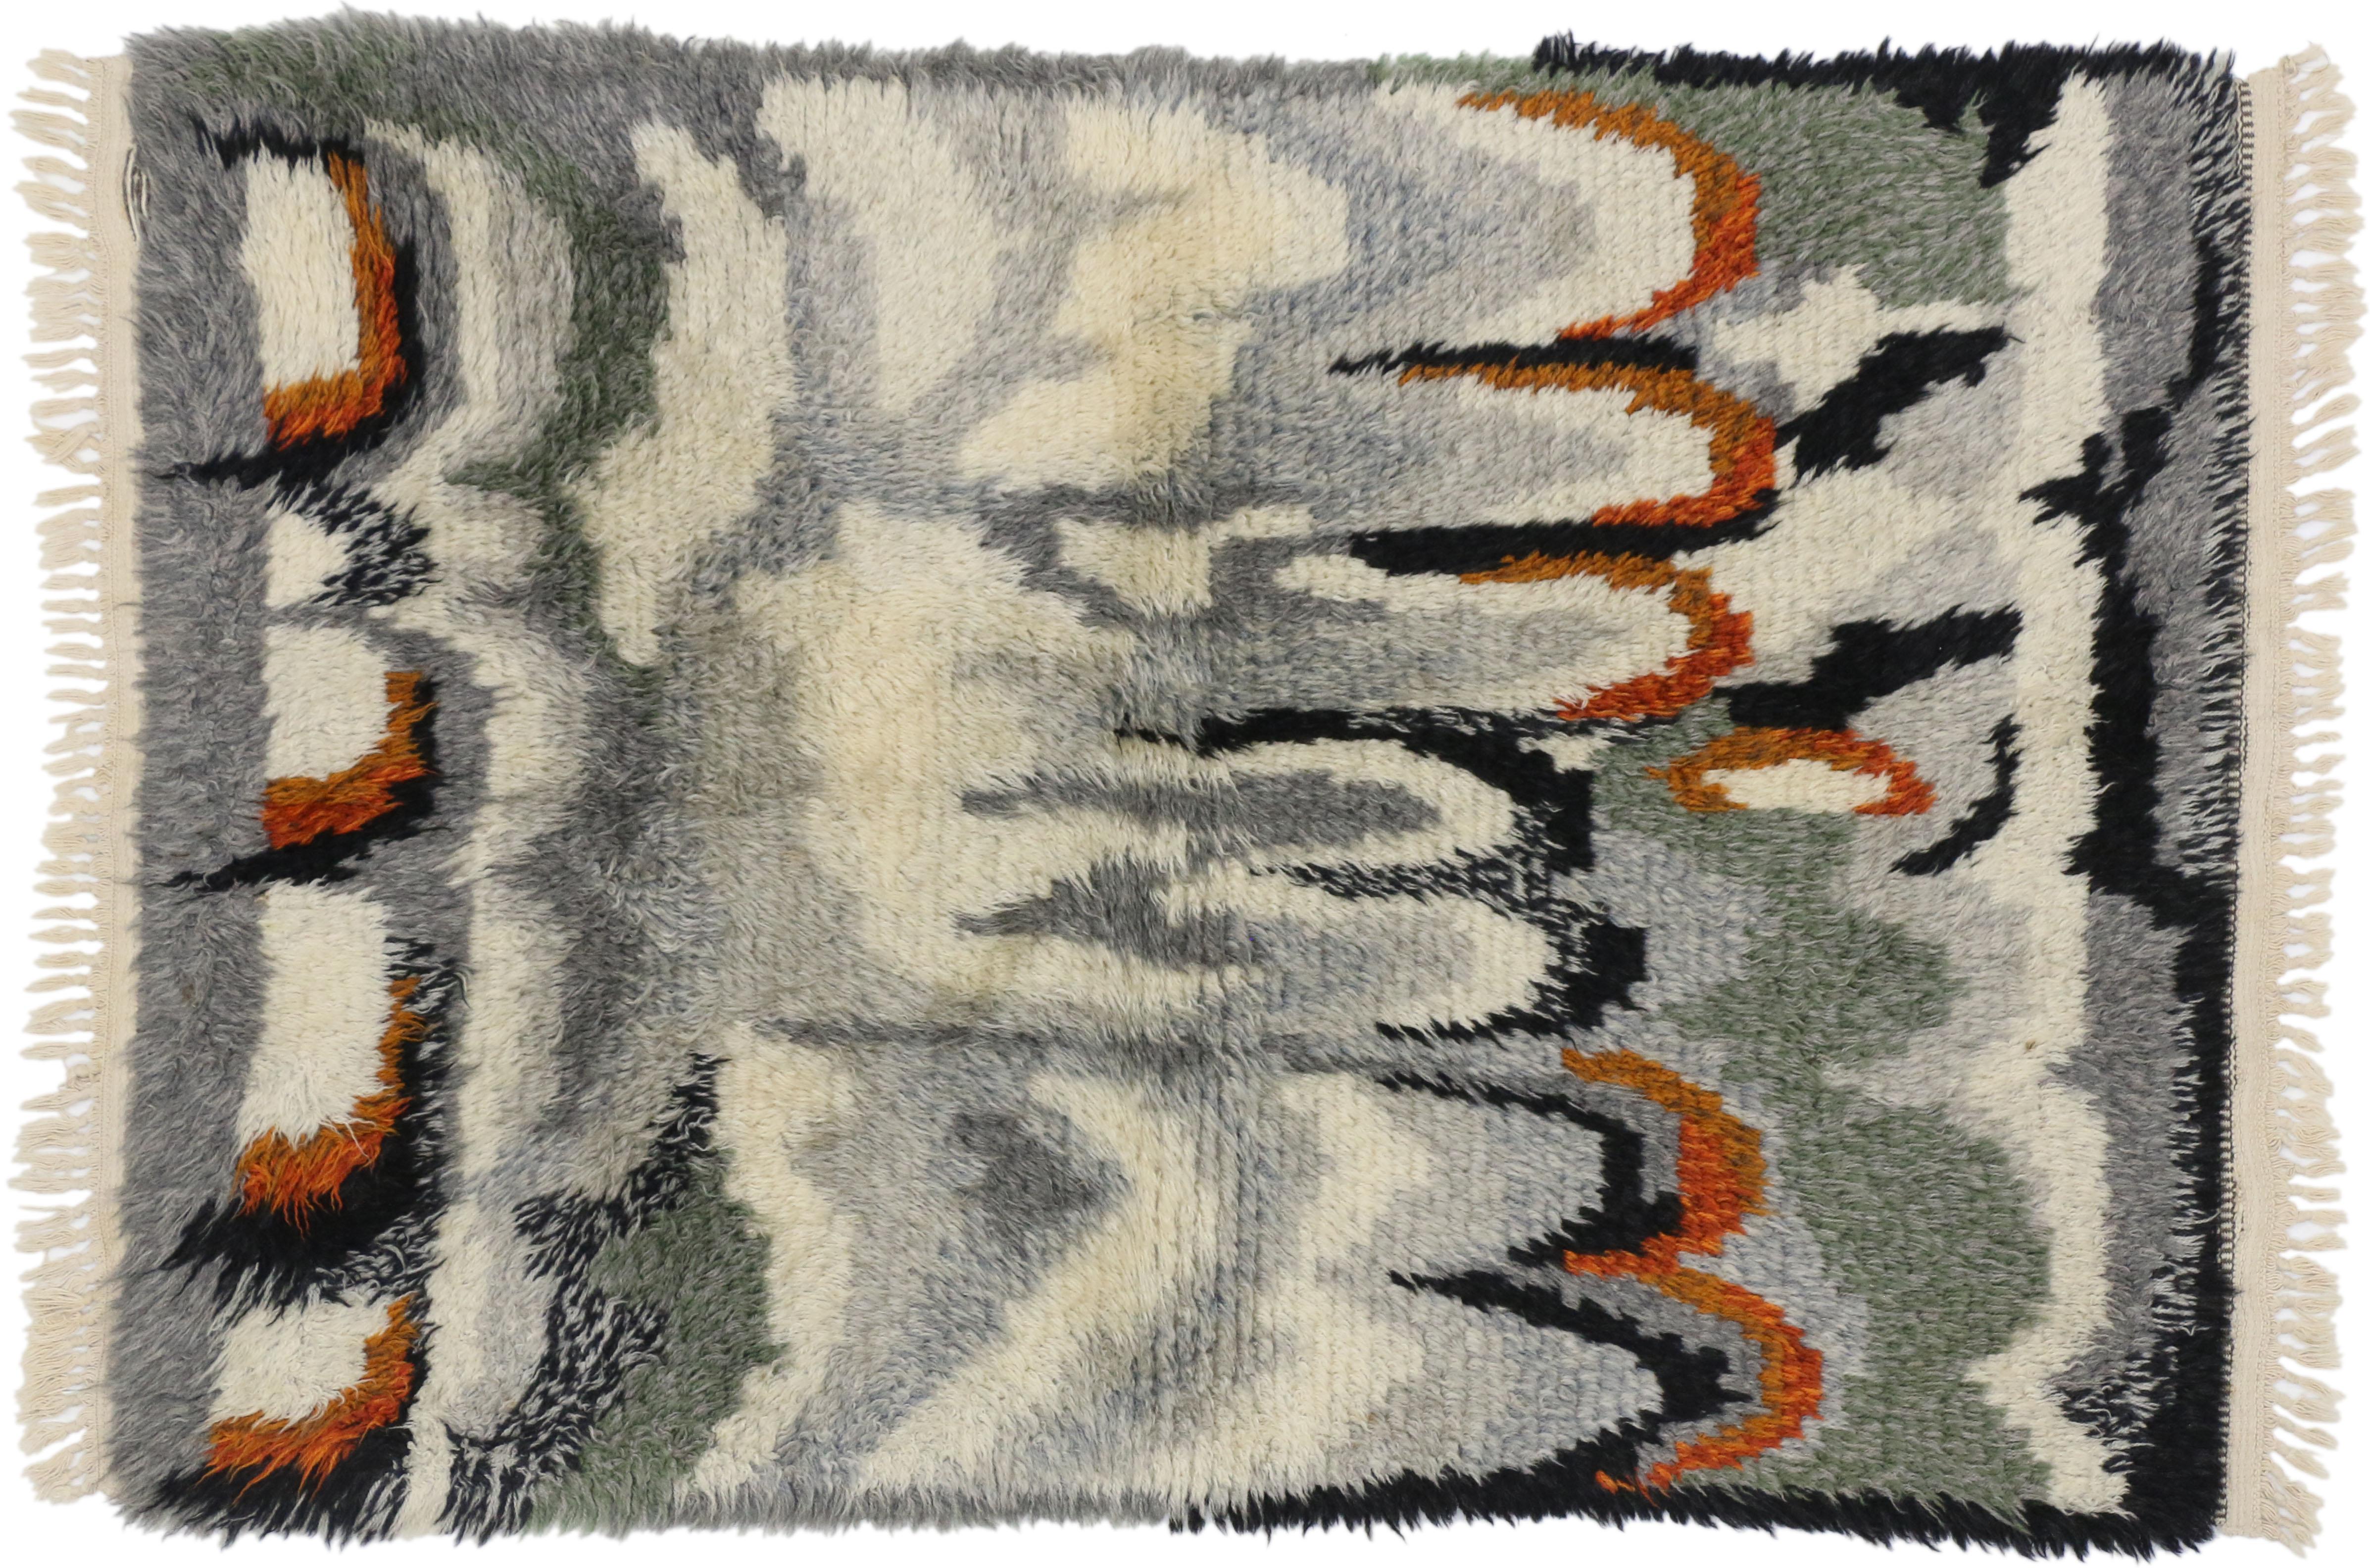 20th Century Scandinavian Modern Swedish Vintage Ege Rya Rug, Danish Design Shag Tapestry